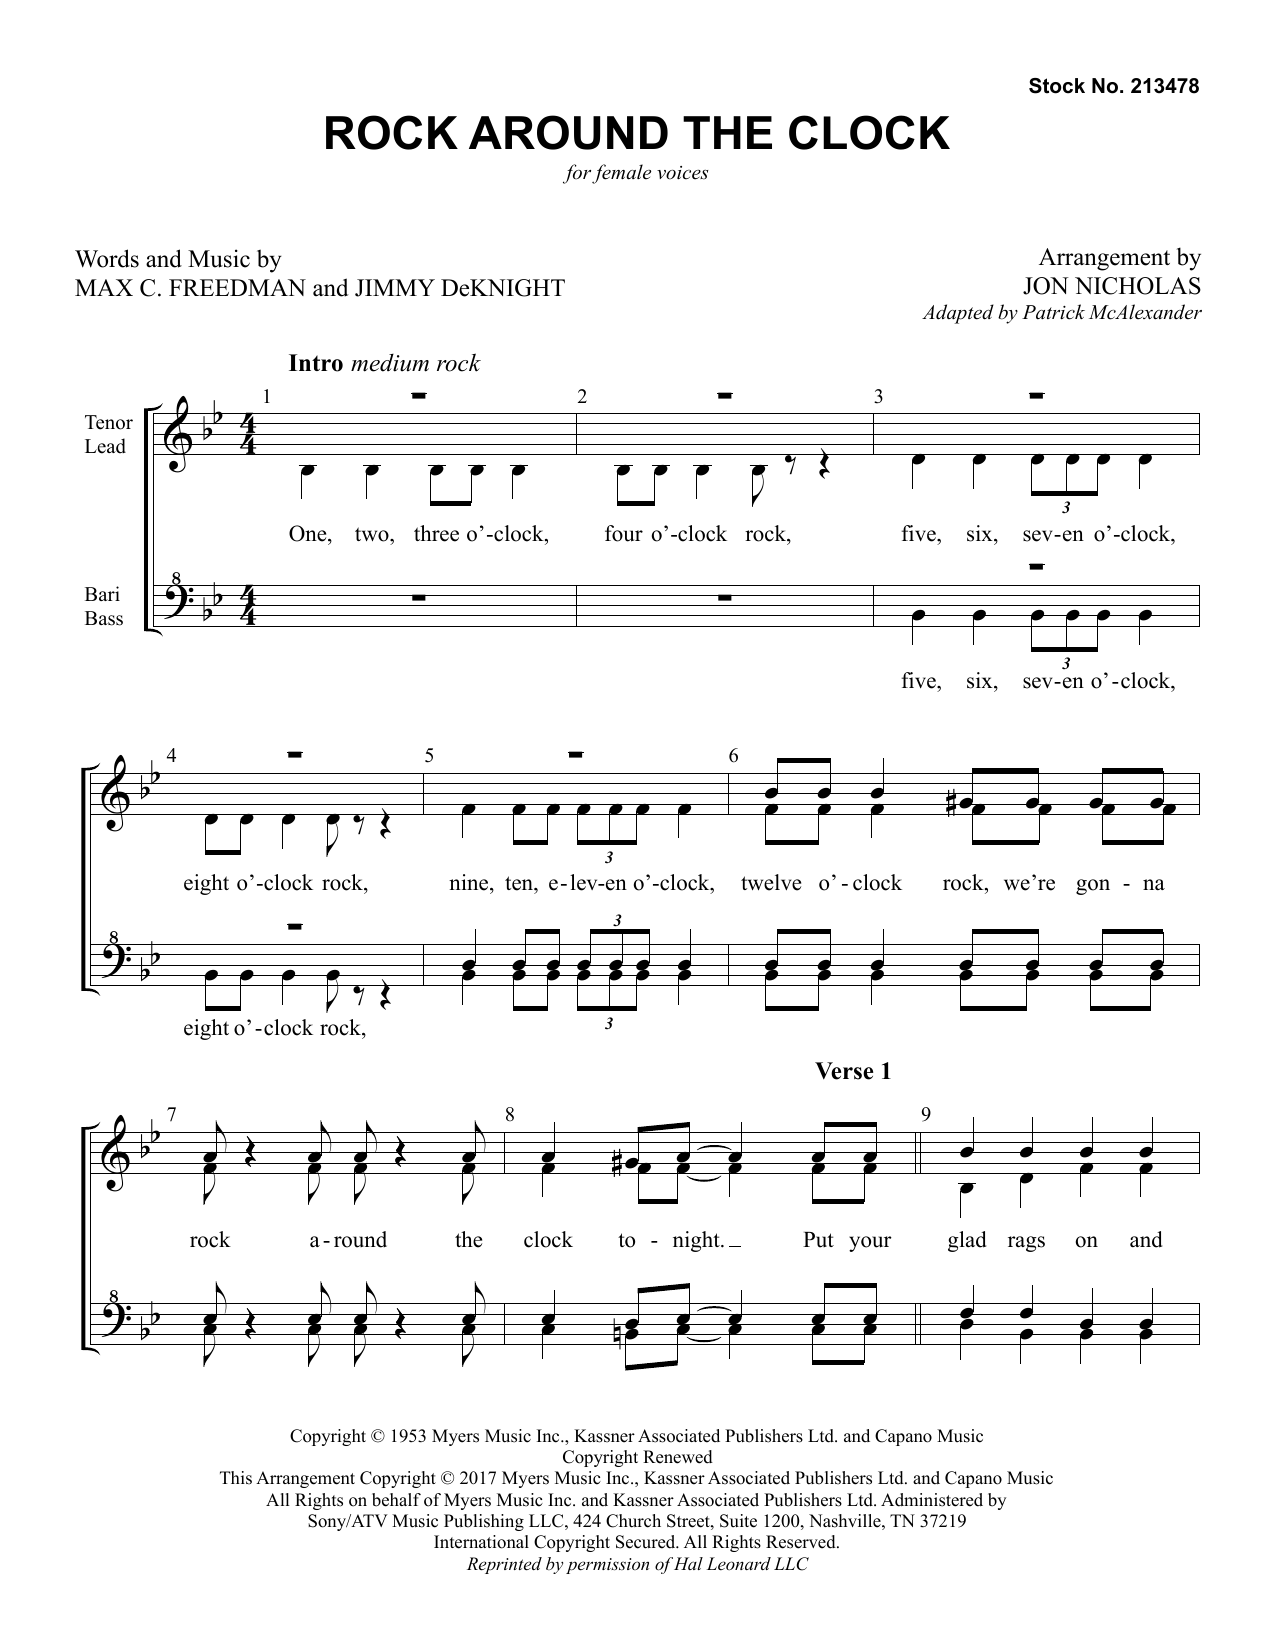 Max C. Freedman & Jimmy DeKnight Rock Around The Clock (arr. Jon Nicholas) Sheet Music Notes & Chords for SSAA Choir - Download or Print PDF